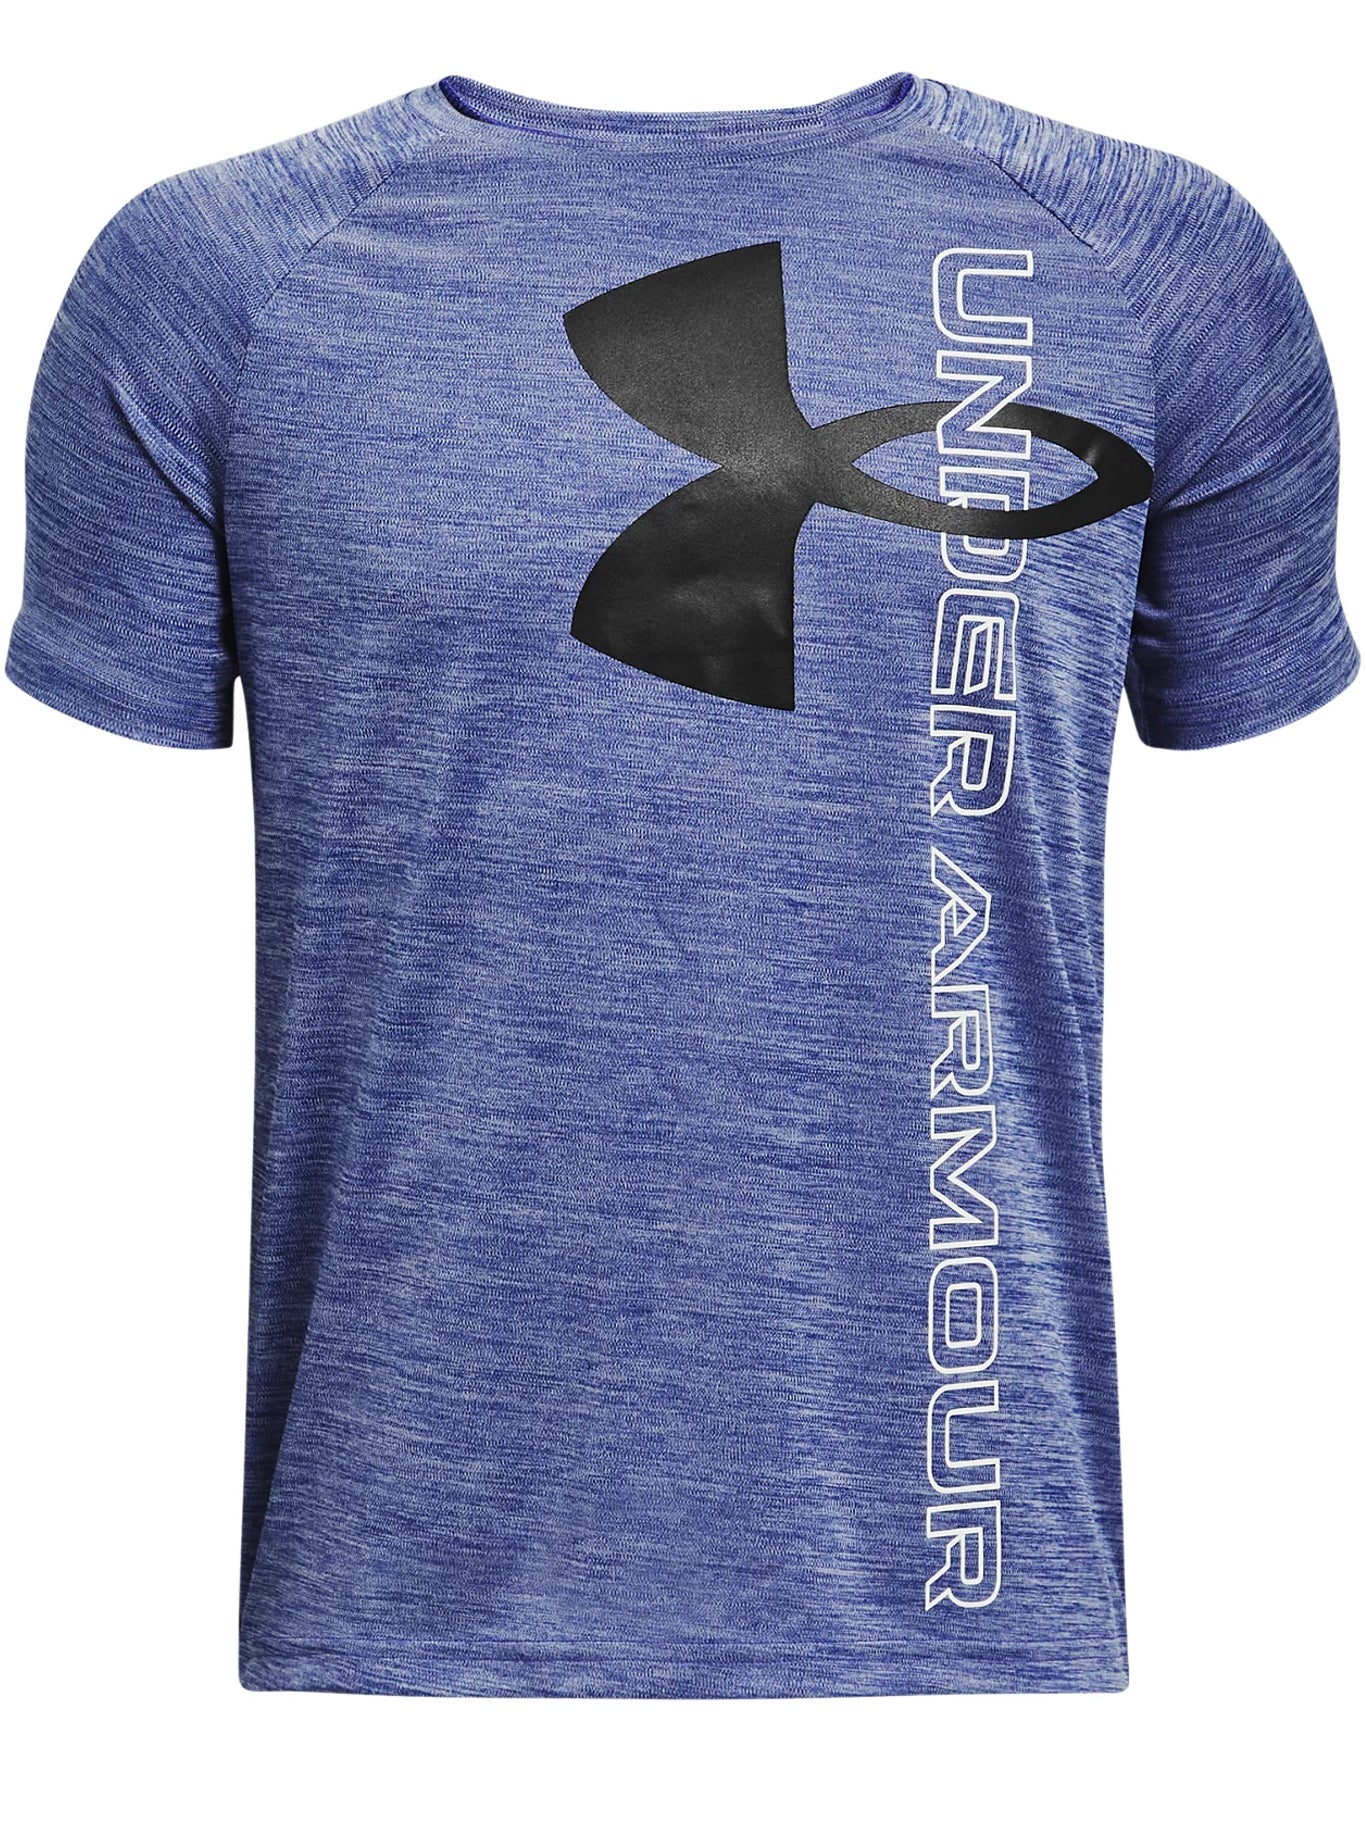 boys' ua tech split logo hybrid short sleeve